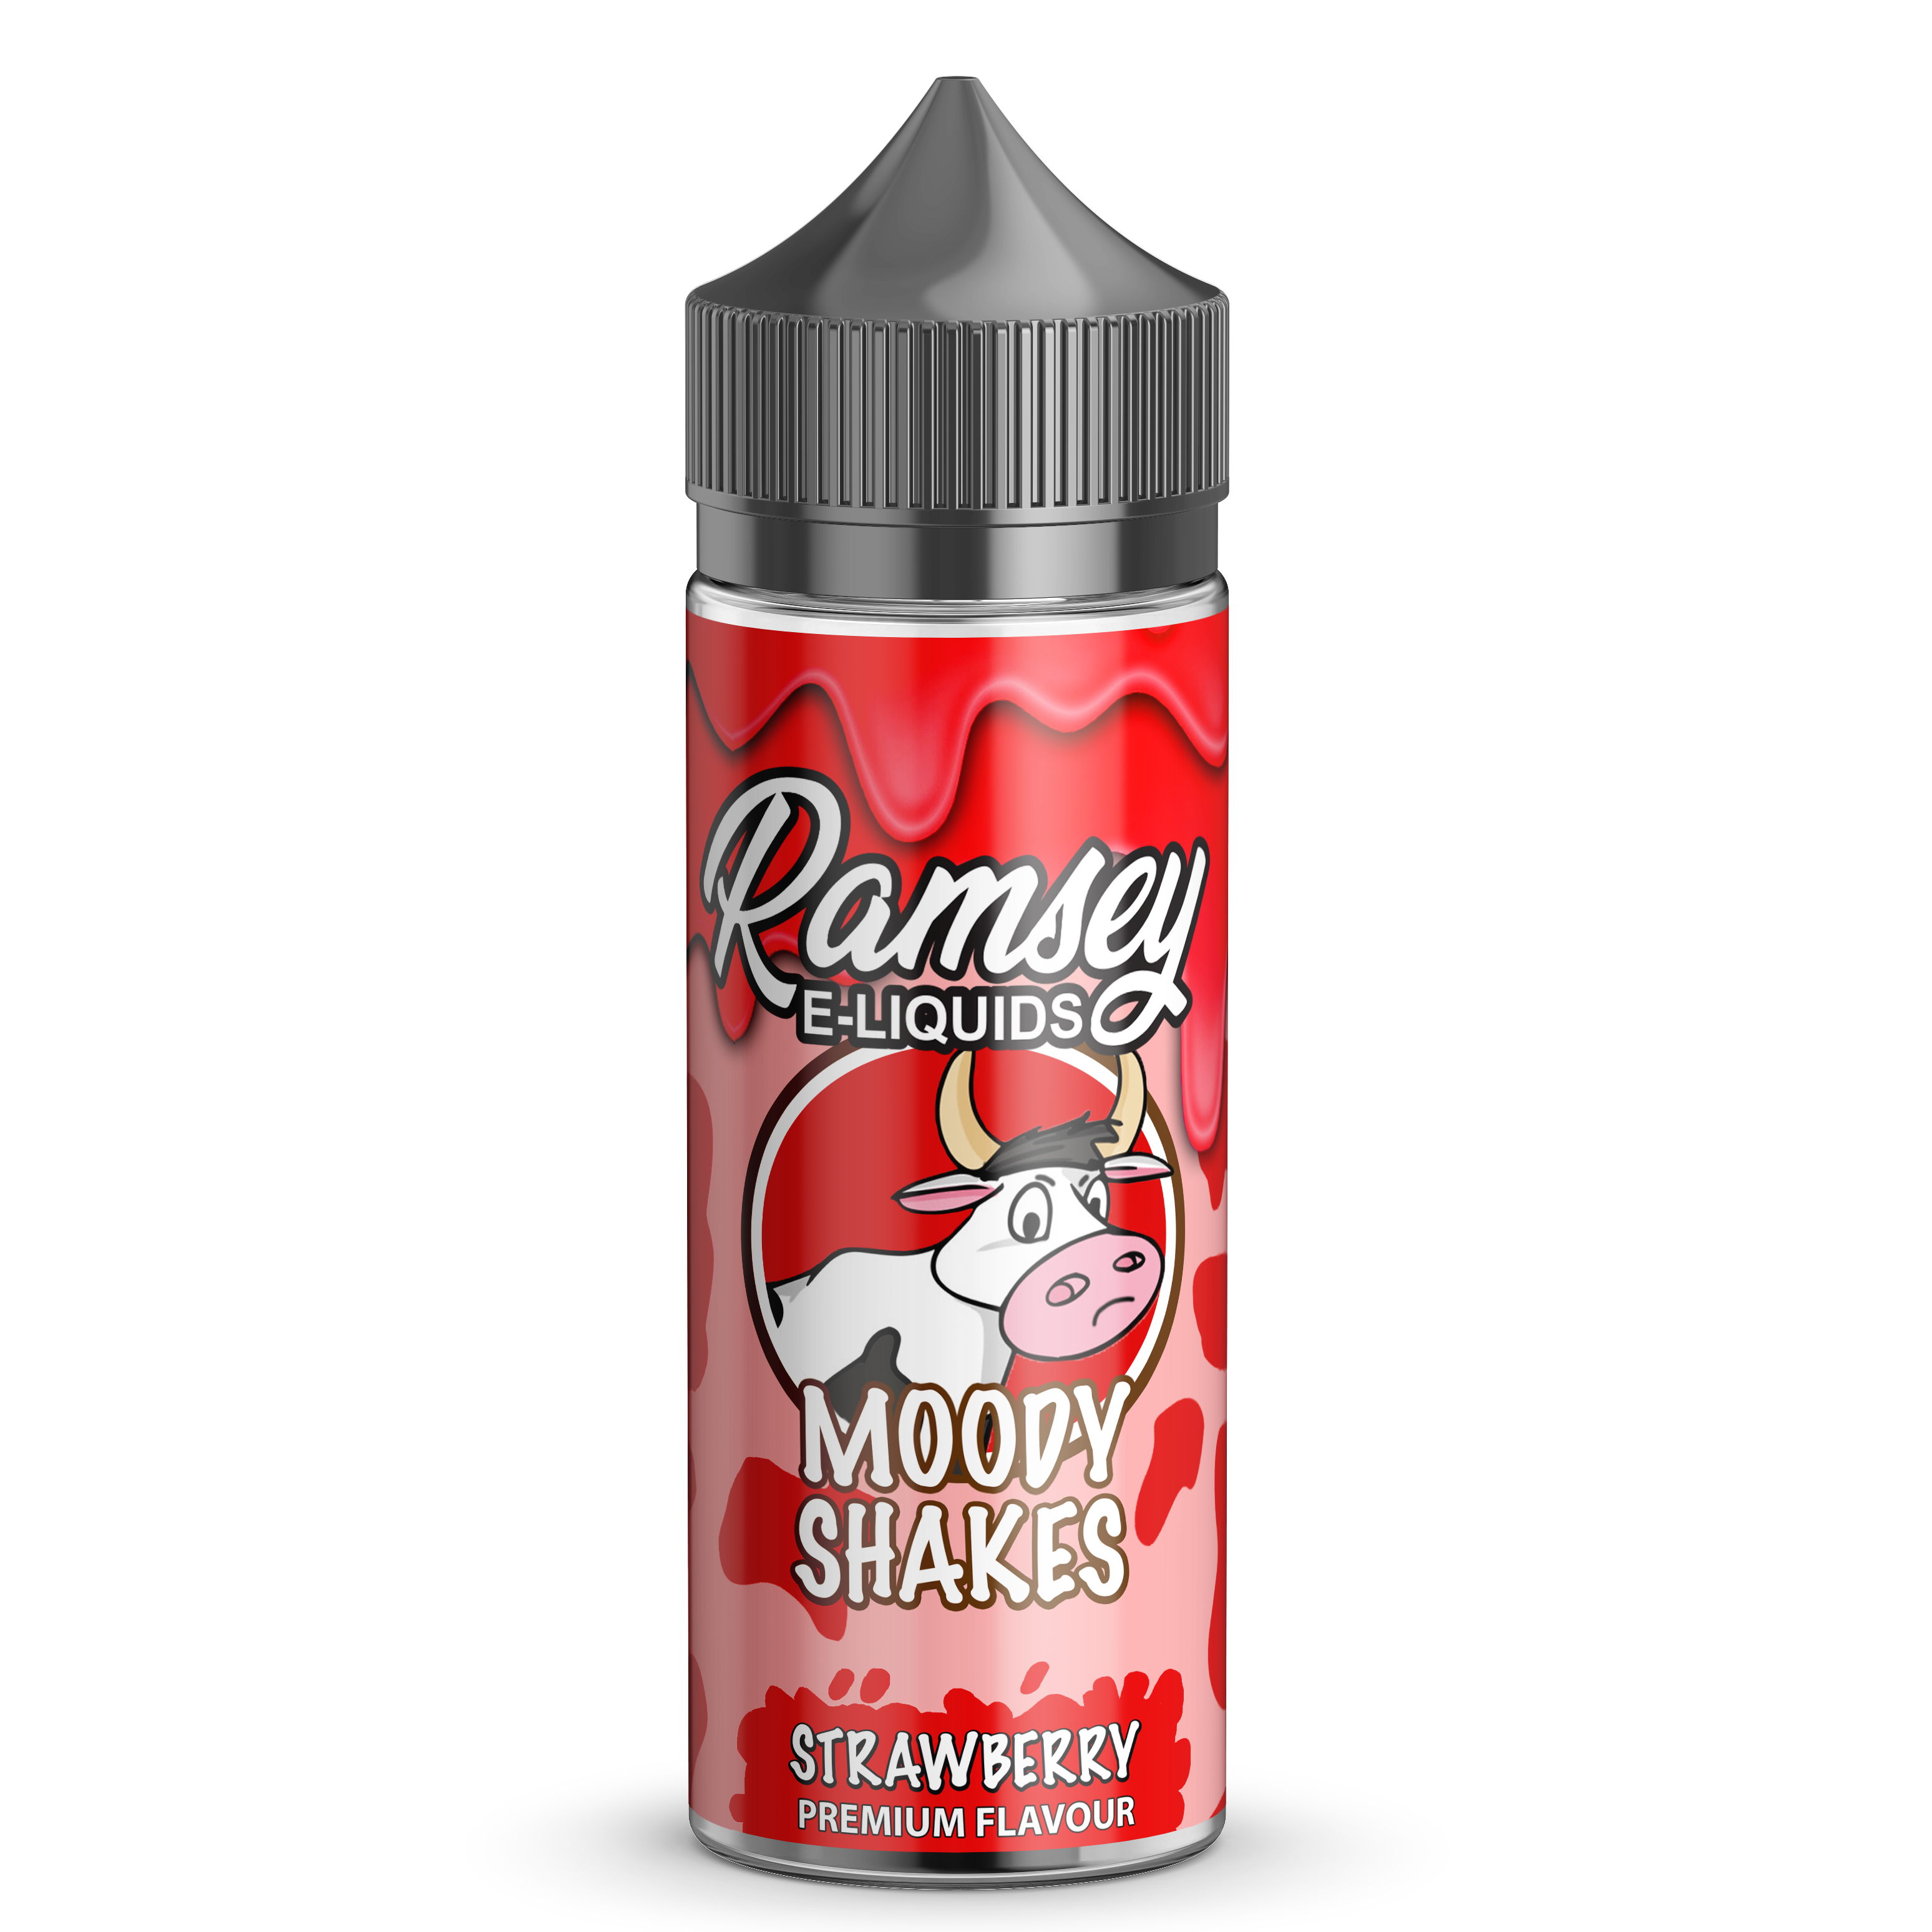 Ramsey E-Liquids Moody Shakes Strawberry 0mg 100ml Shortfill E-Liquid